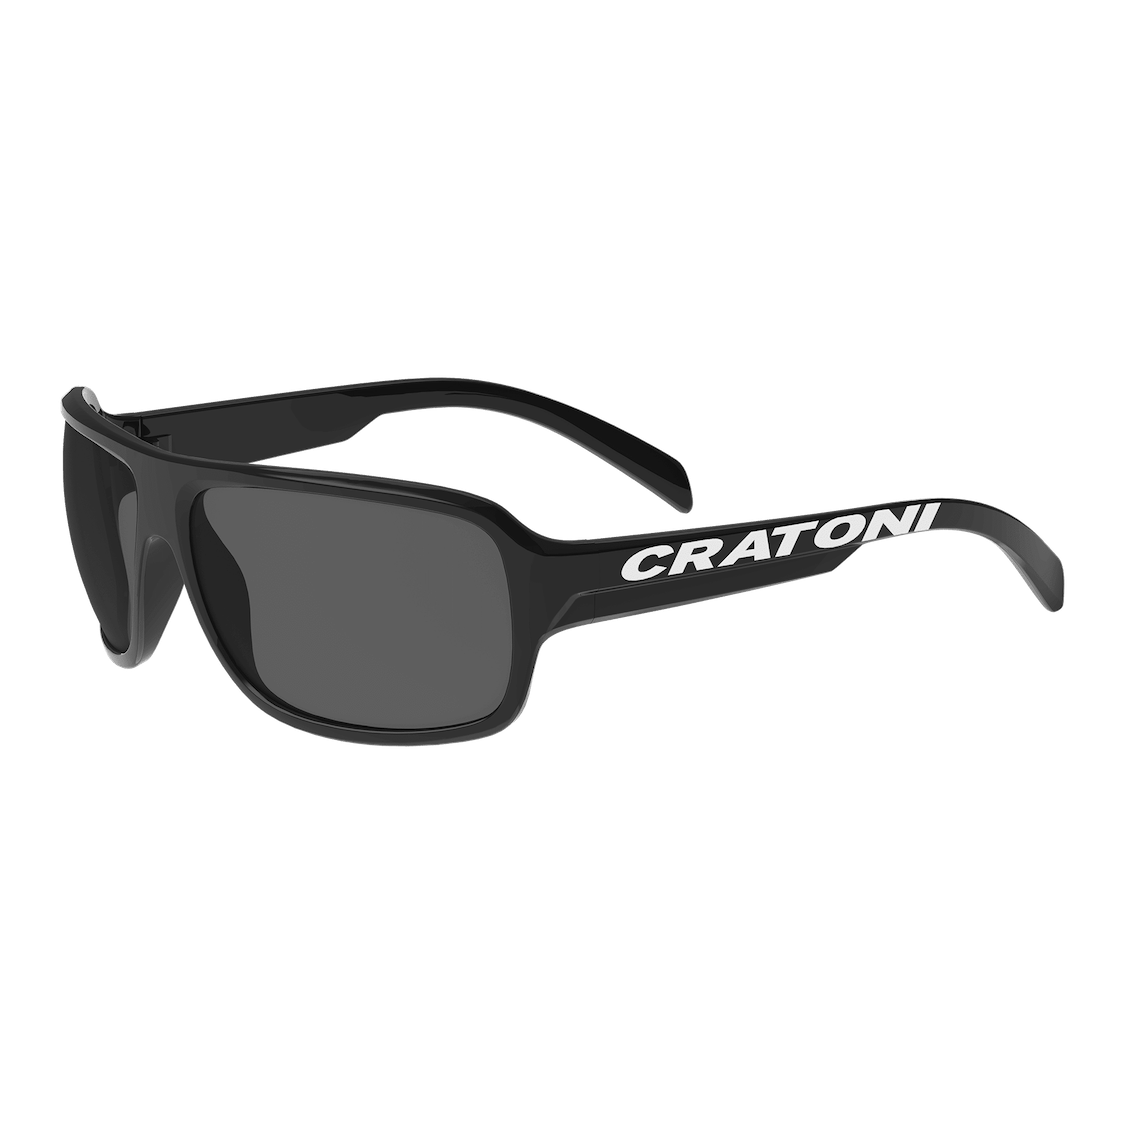 Детские очки Cratoni C-ICE JR black glossy